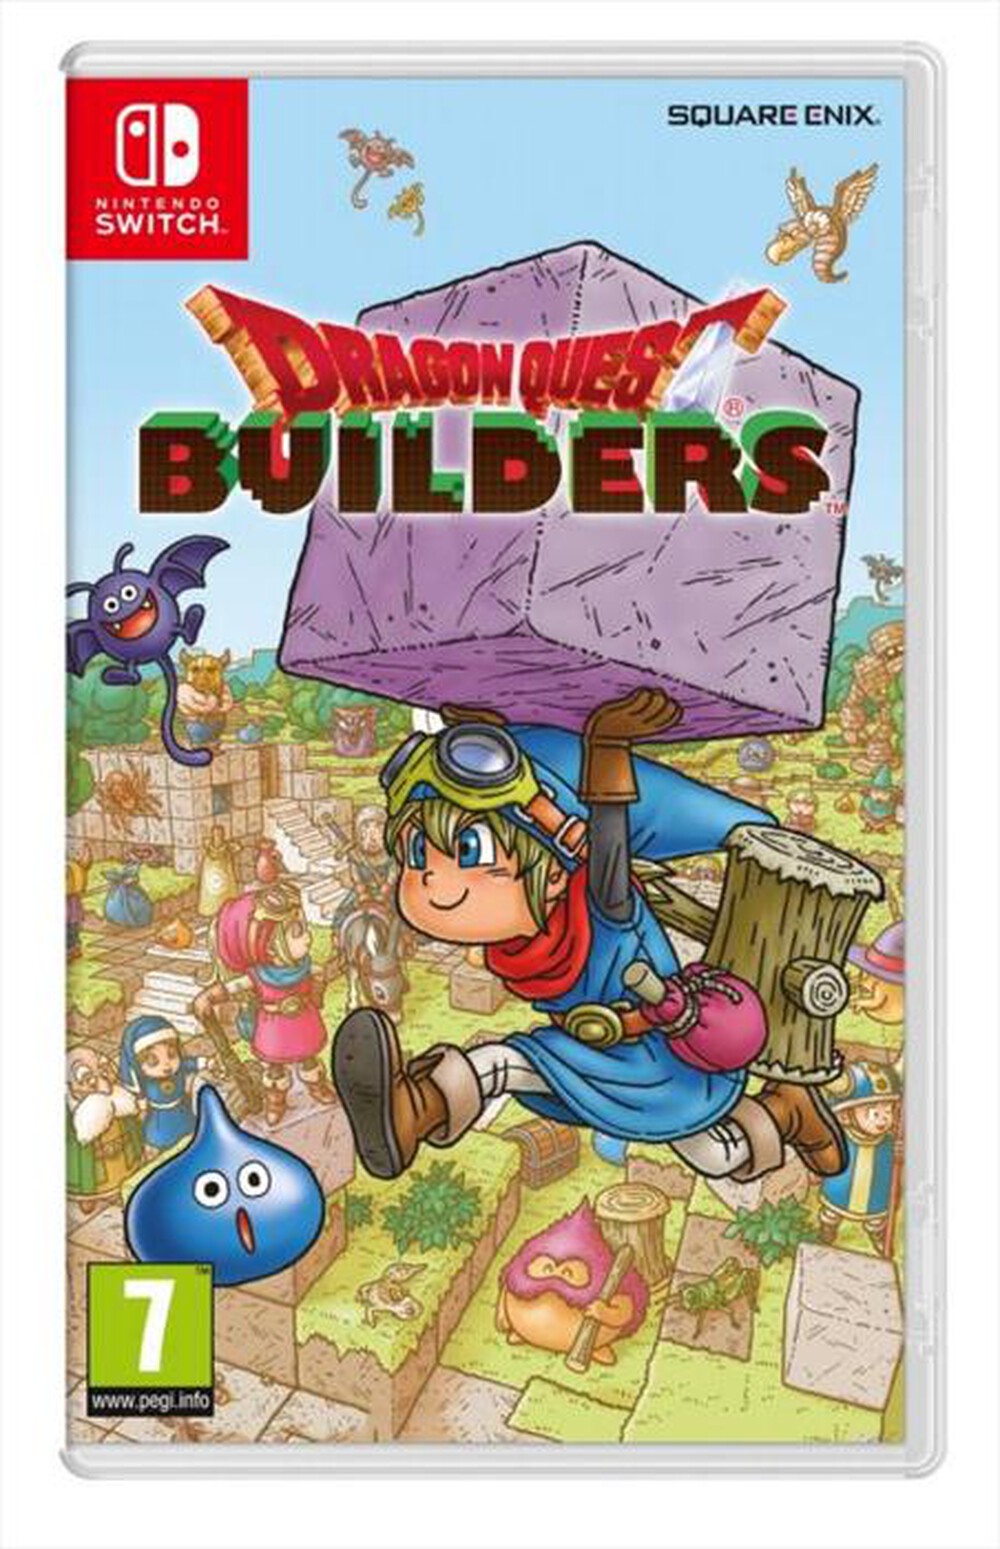 "NINTENDO - Dragon Quest Builders"